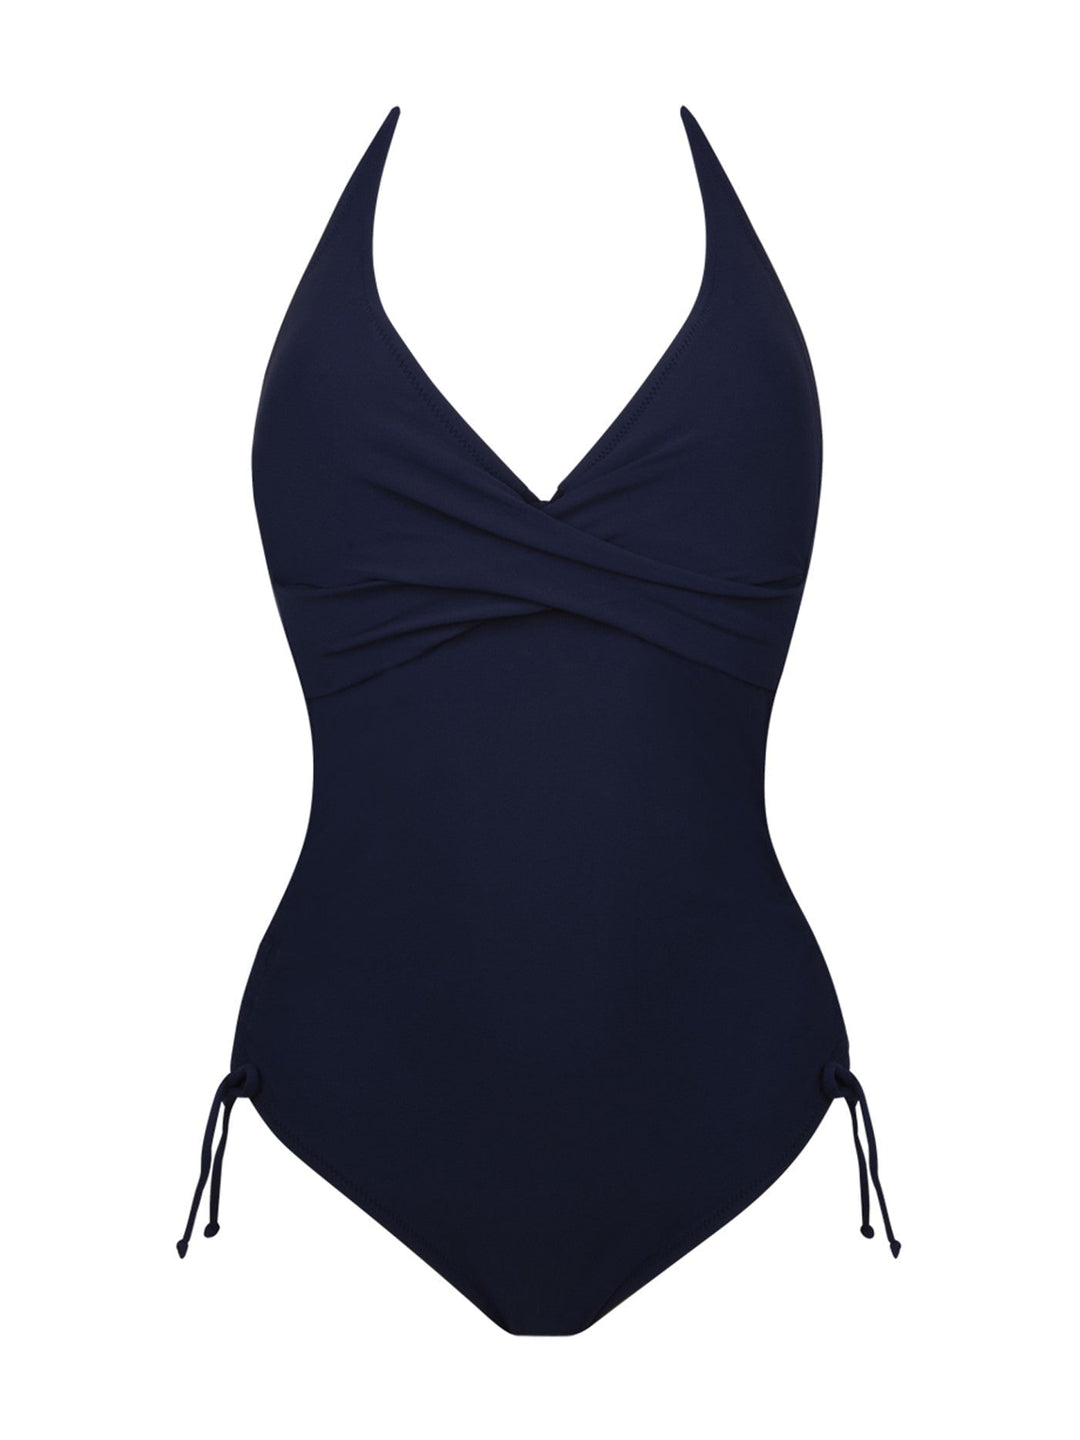 Antigel by Lise Charmel - La Chiquissima Plunging Back Swimsuit Marine Plunge Swimsuit Antigel by Lise Charmel Swimwear 